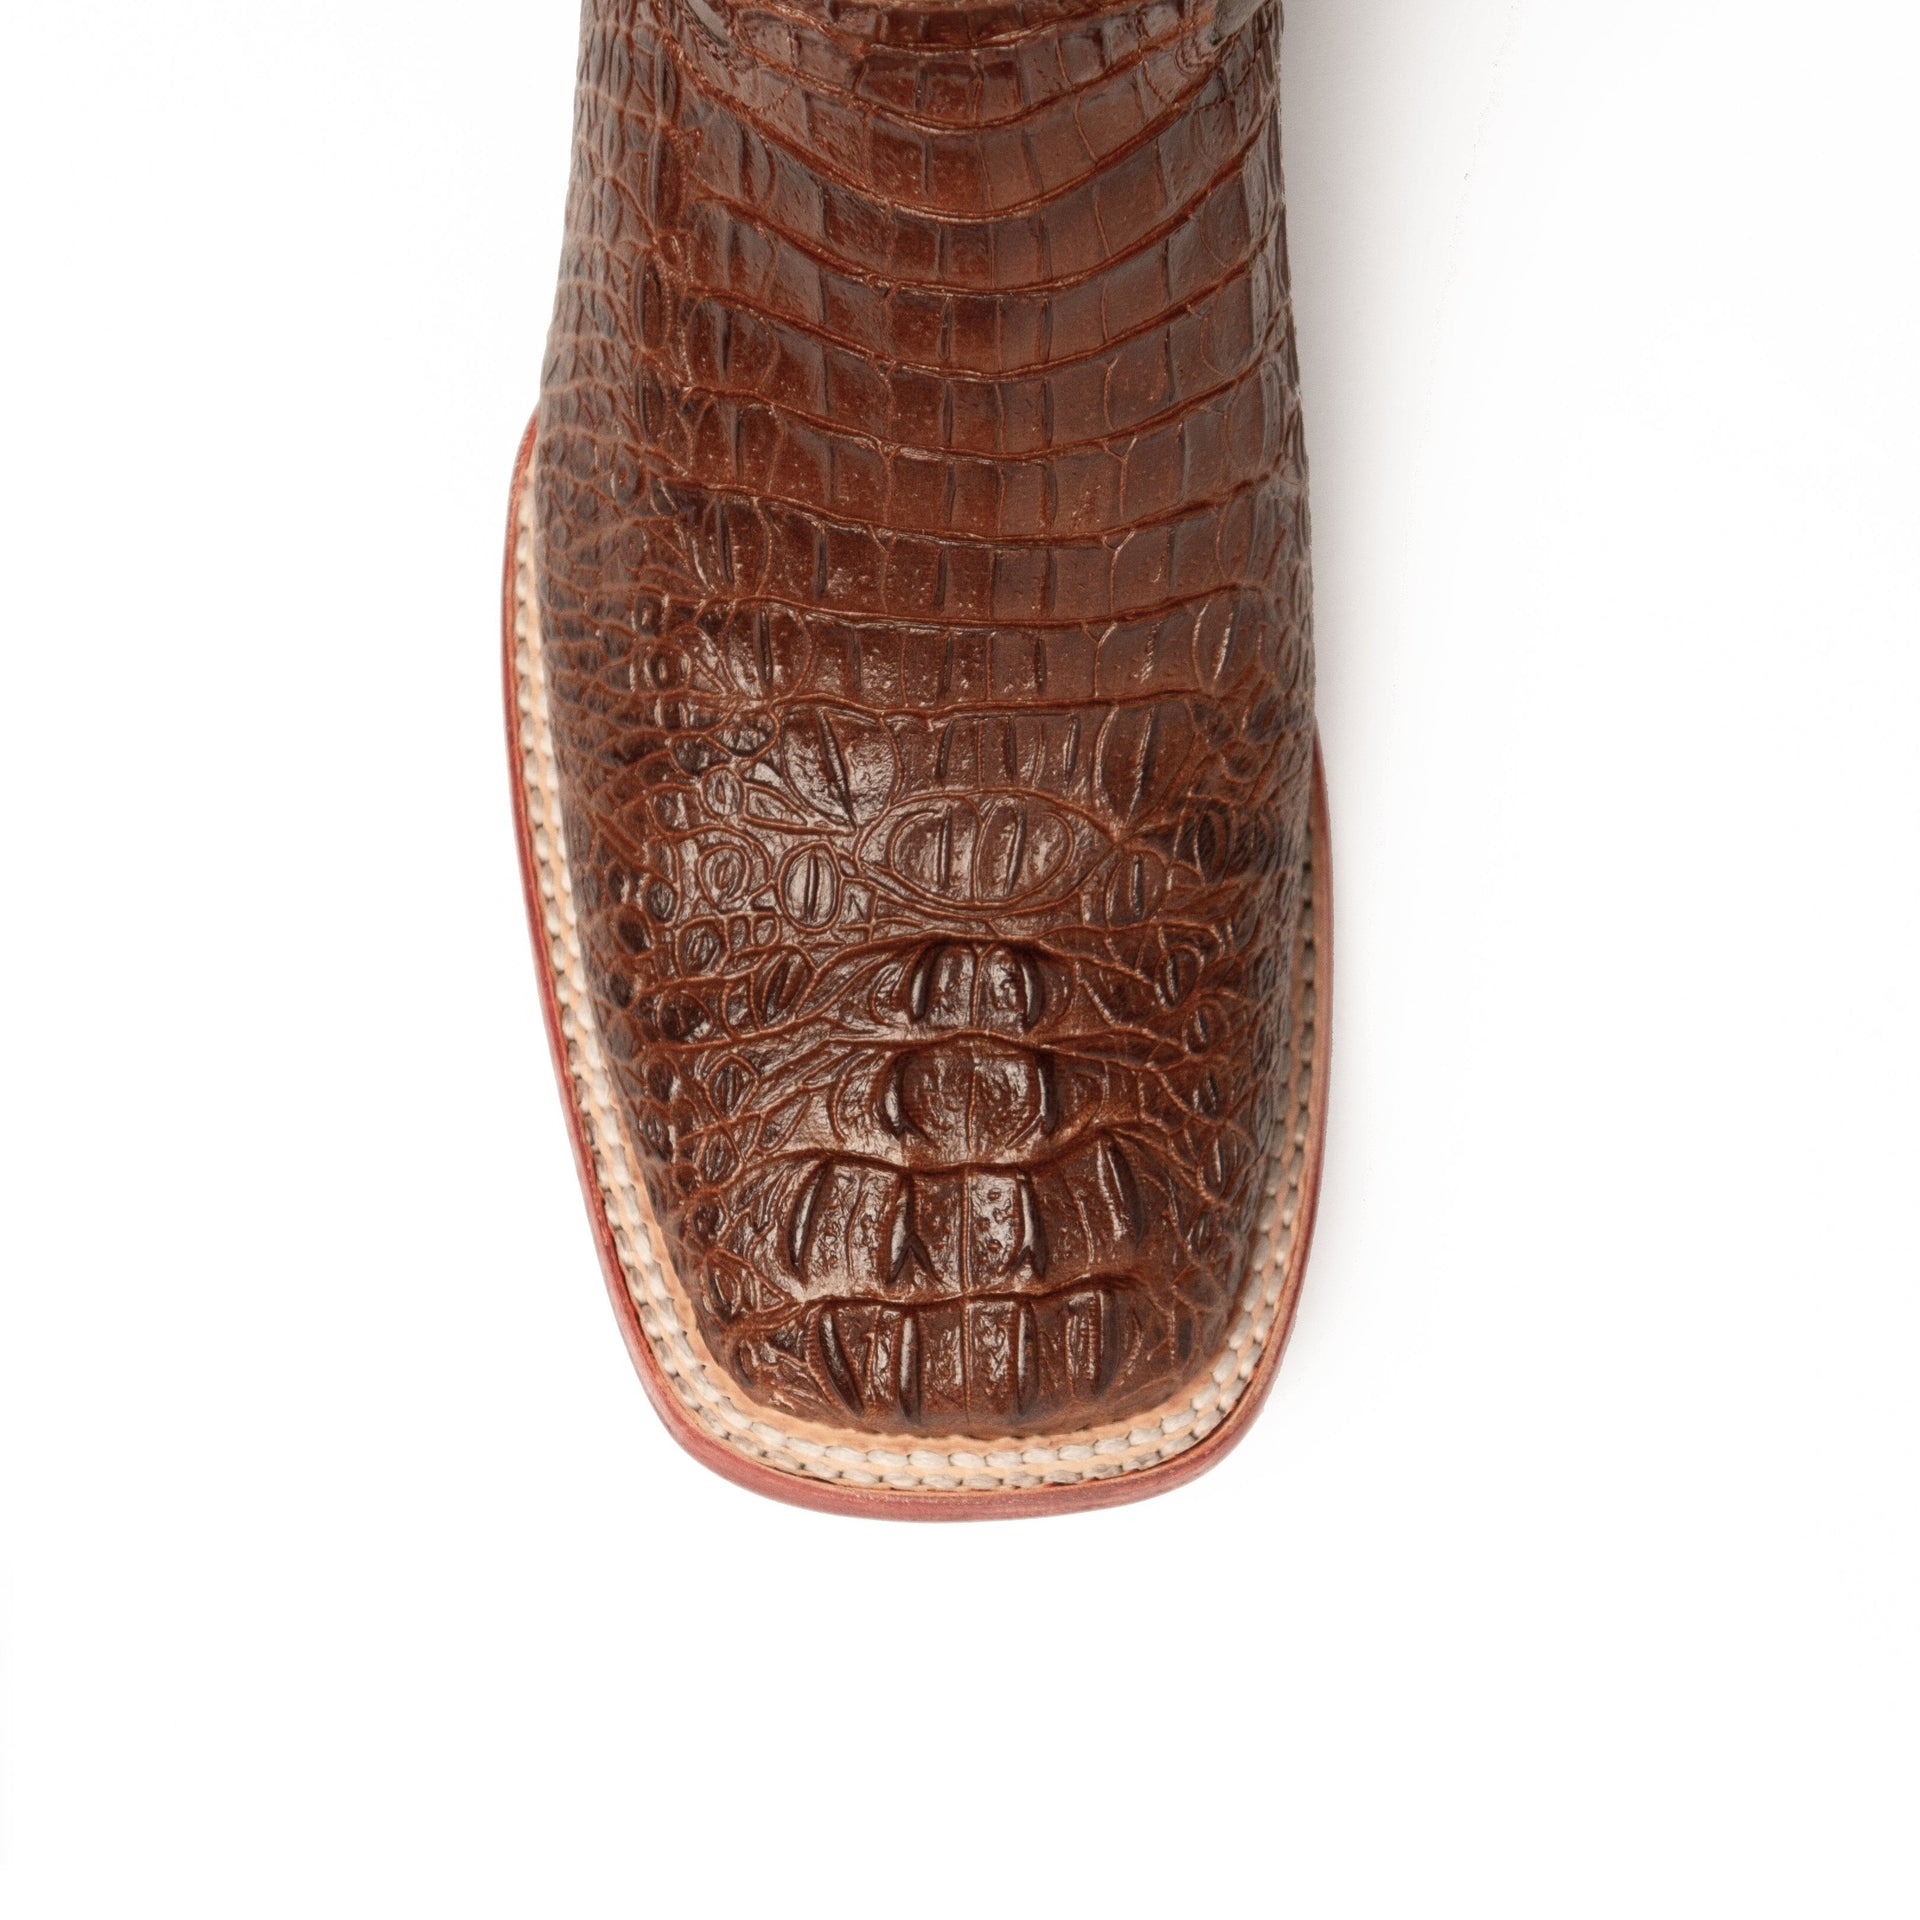 Men's Ferrini Stampede Caiman Crocodile Print Boots Handcrafted Sport Rust - yeehawcowboy